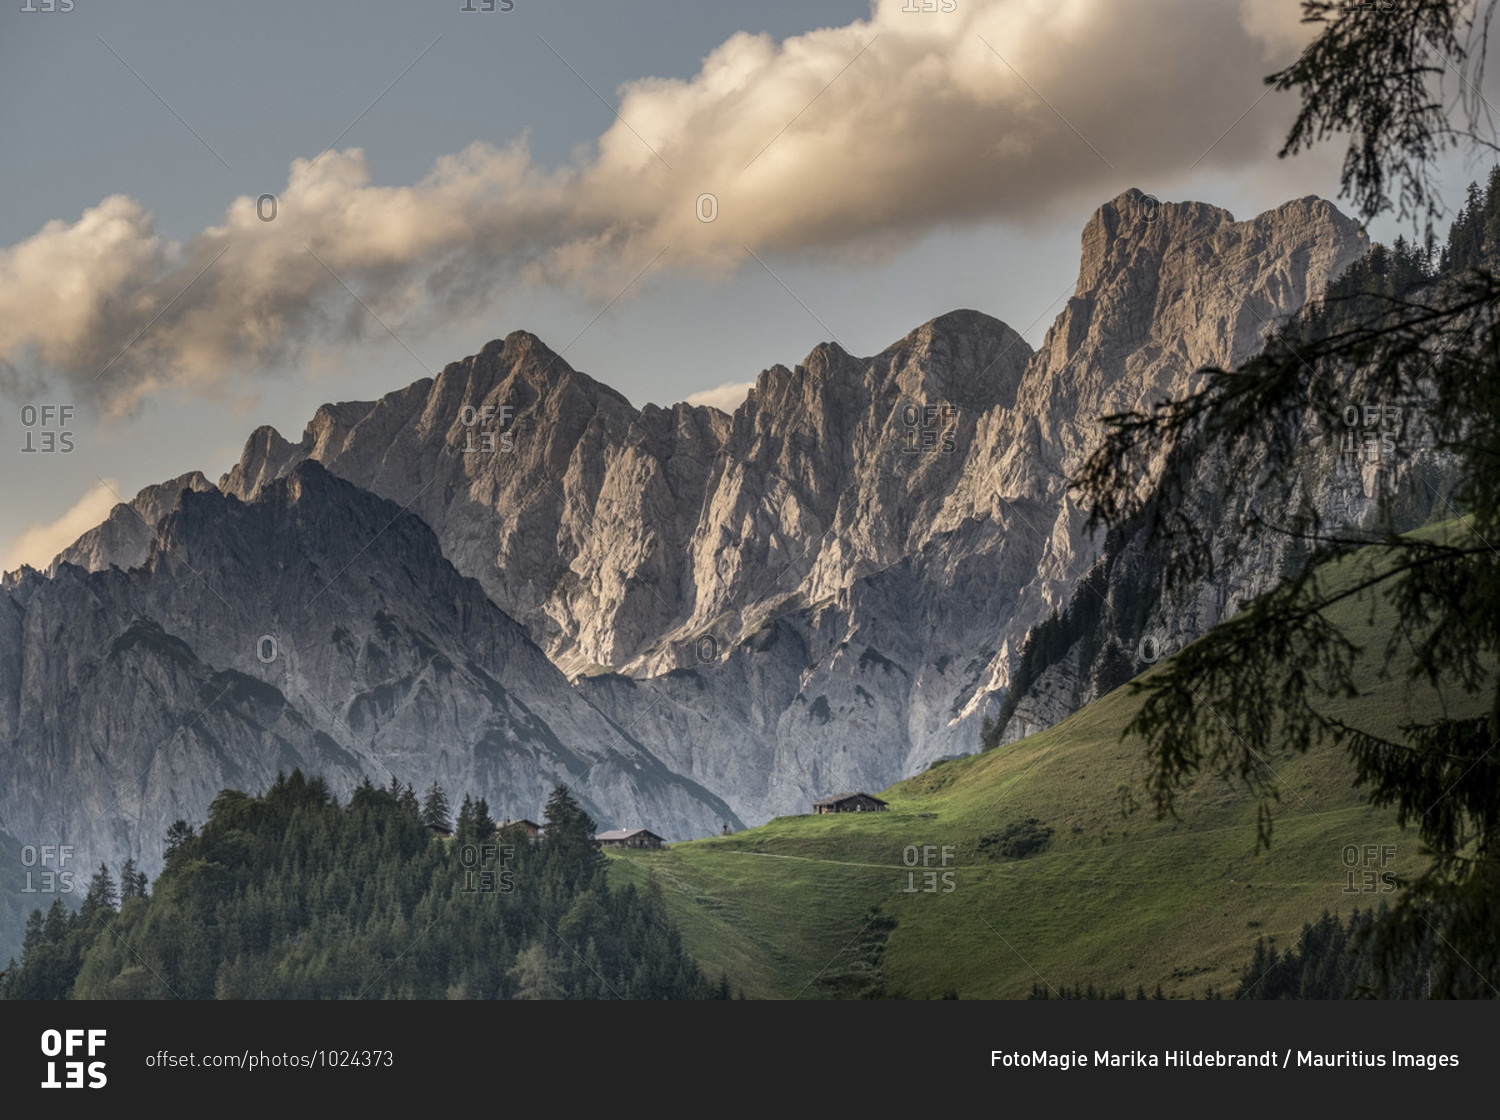 Alpine pastures in the mountains, Berchtesgaden, Berchtesgadener Land, Upper Bavaria, Bavaria, Germany, Alps, mountains, Berchtesgadener Berge,